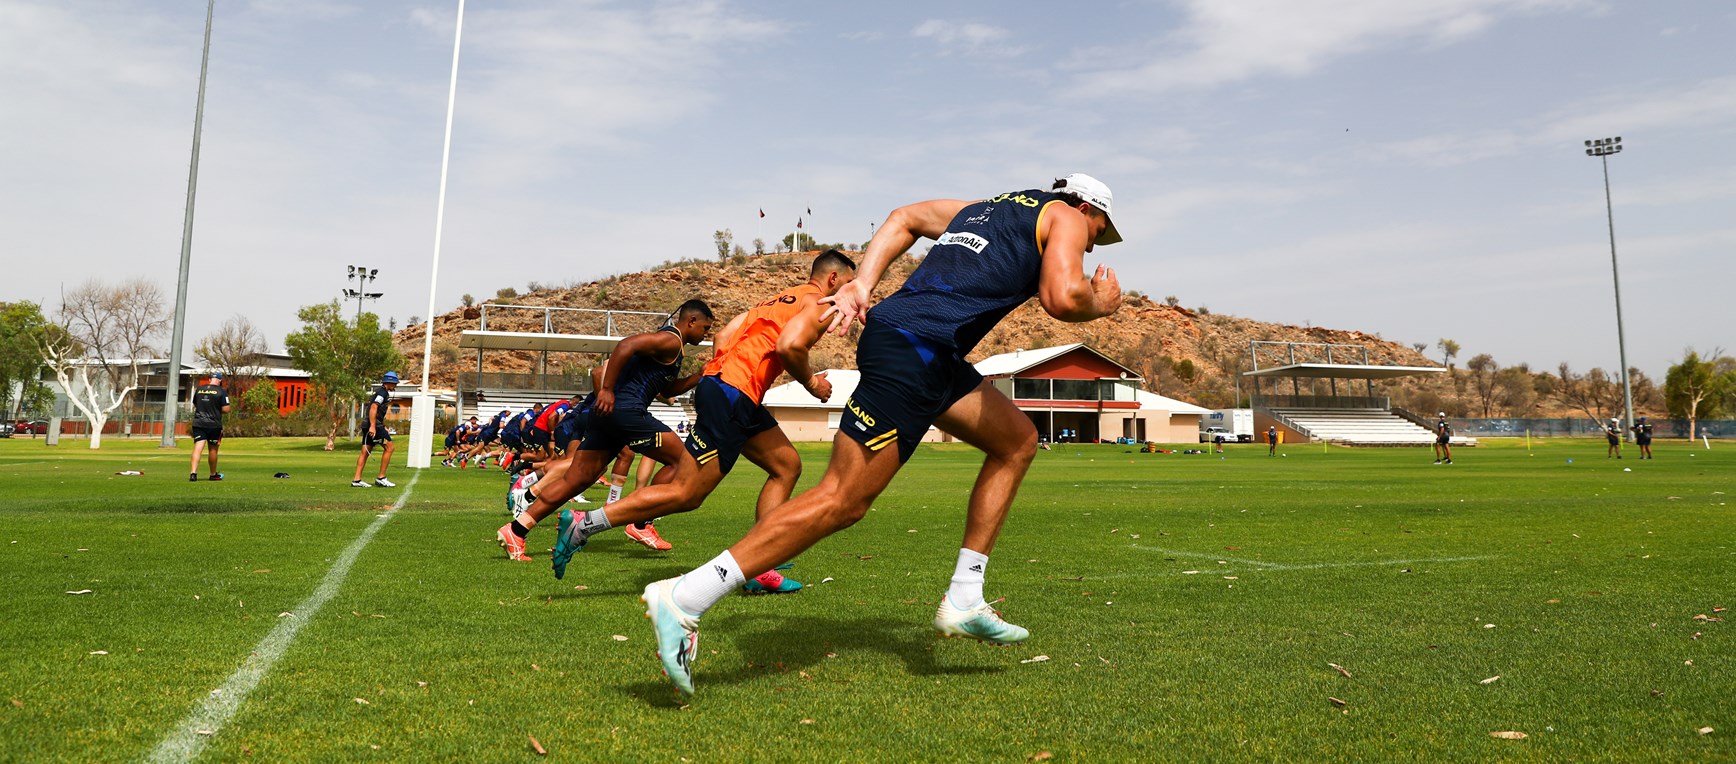 Training heats up in Alice Springs